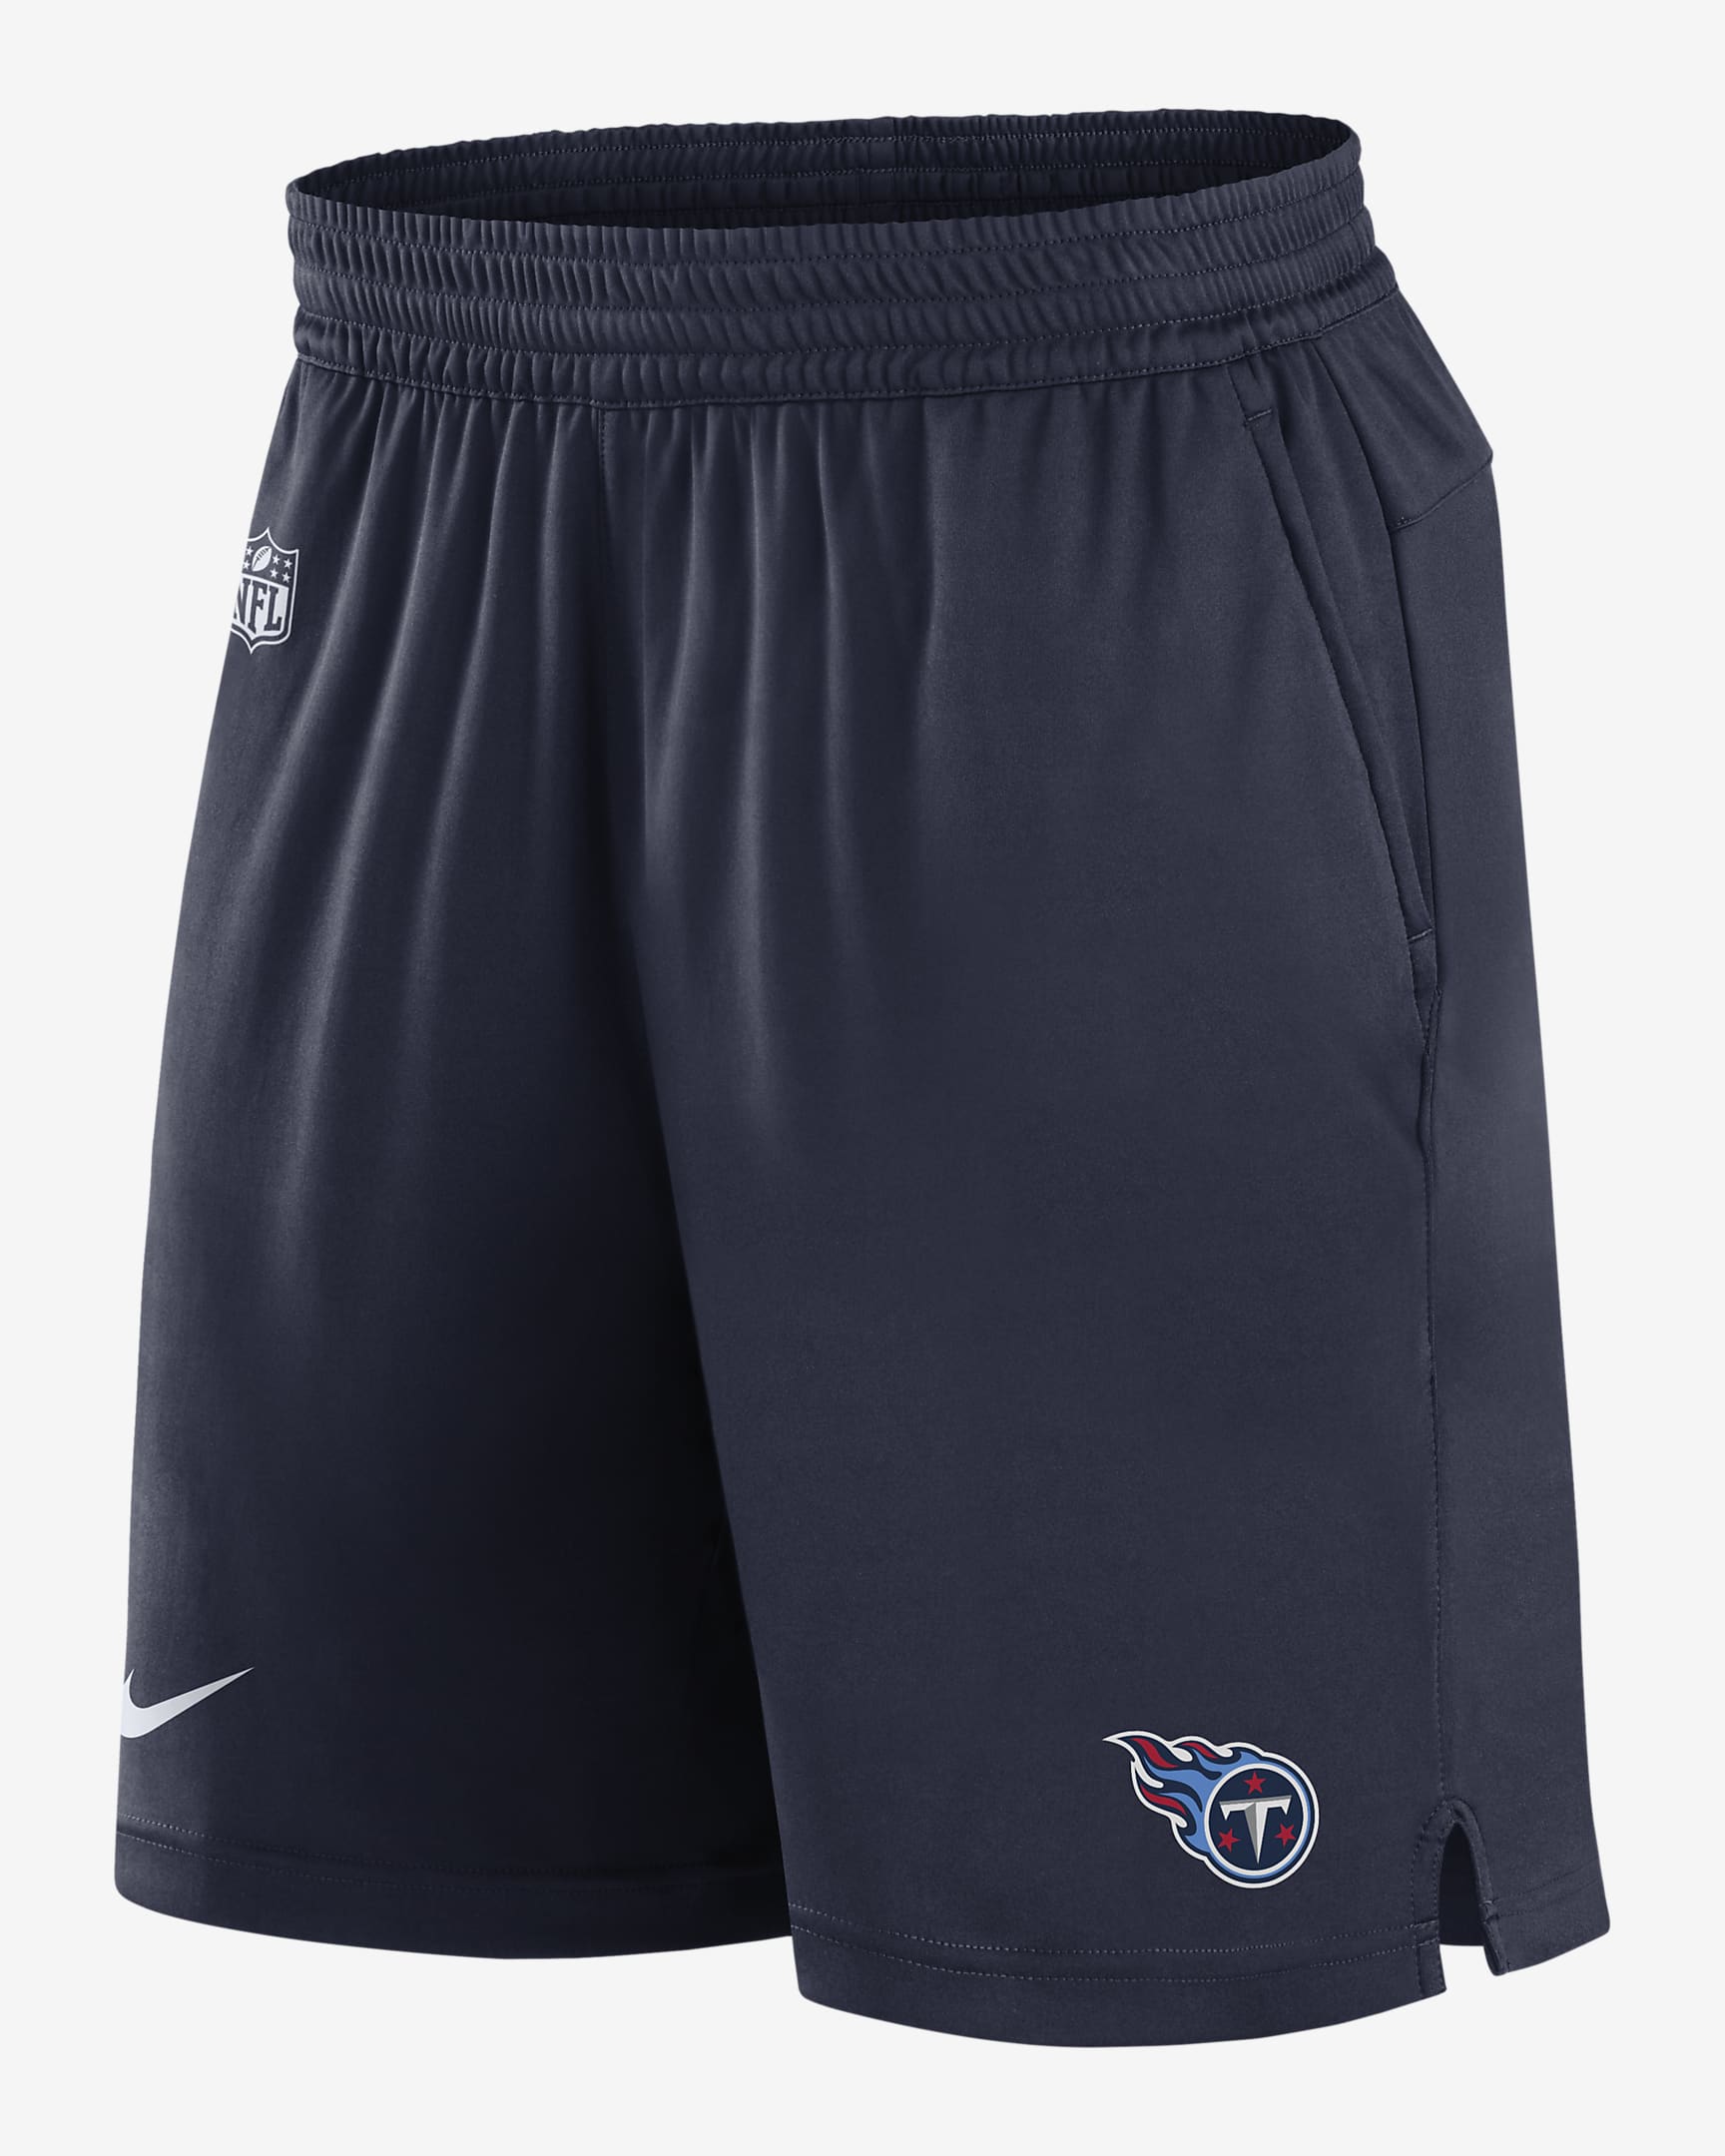 Nike Dri-FIT Sideline (NFL Tennessee Titans) Men's Shorts. Nike.com